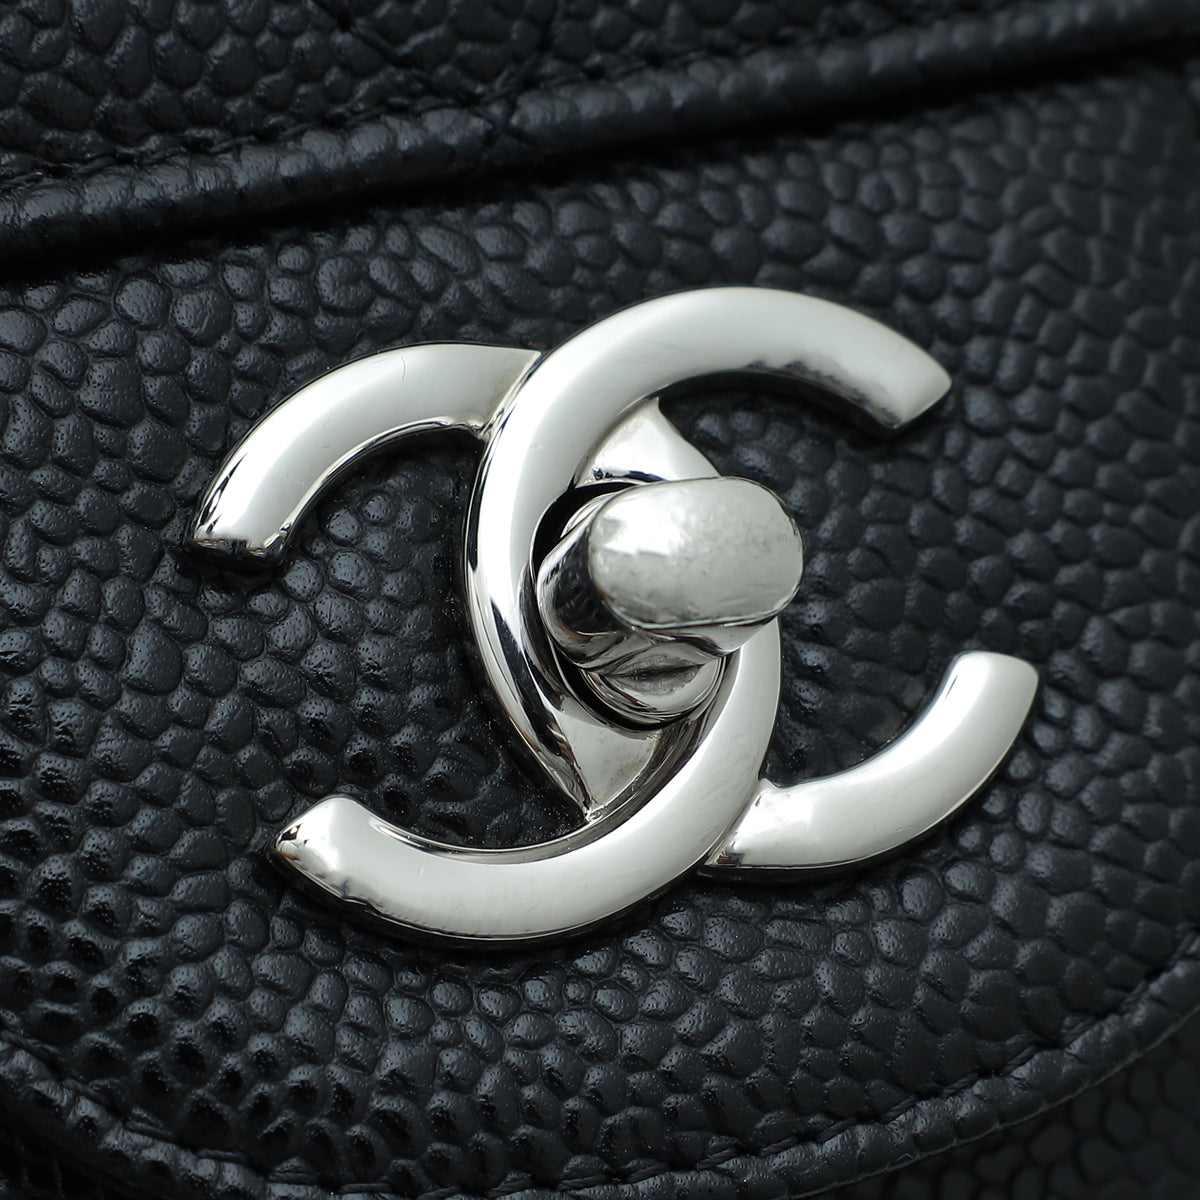 Chanel Black CC Classic Double Flap Jumbo Bag